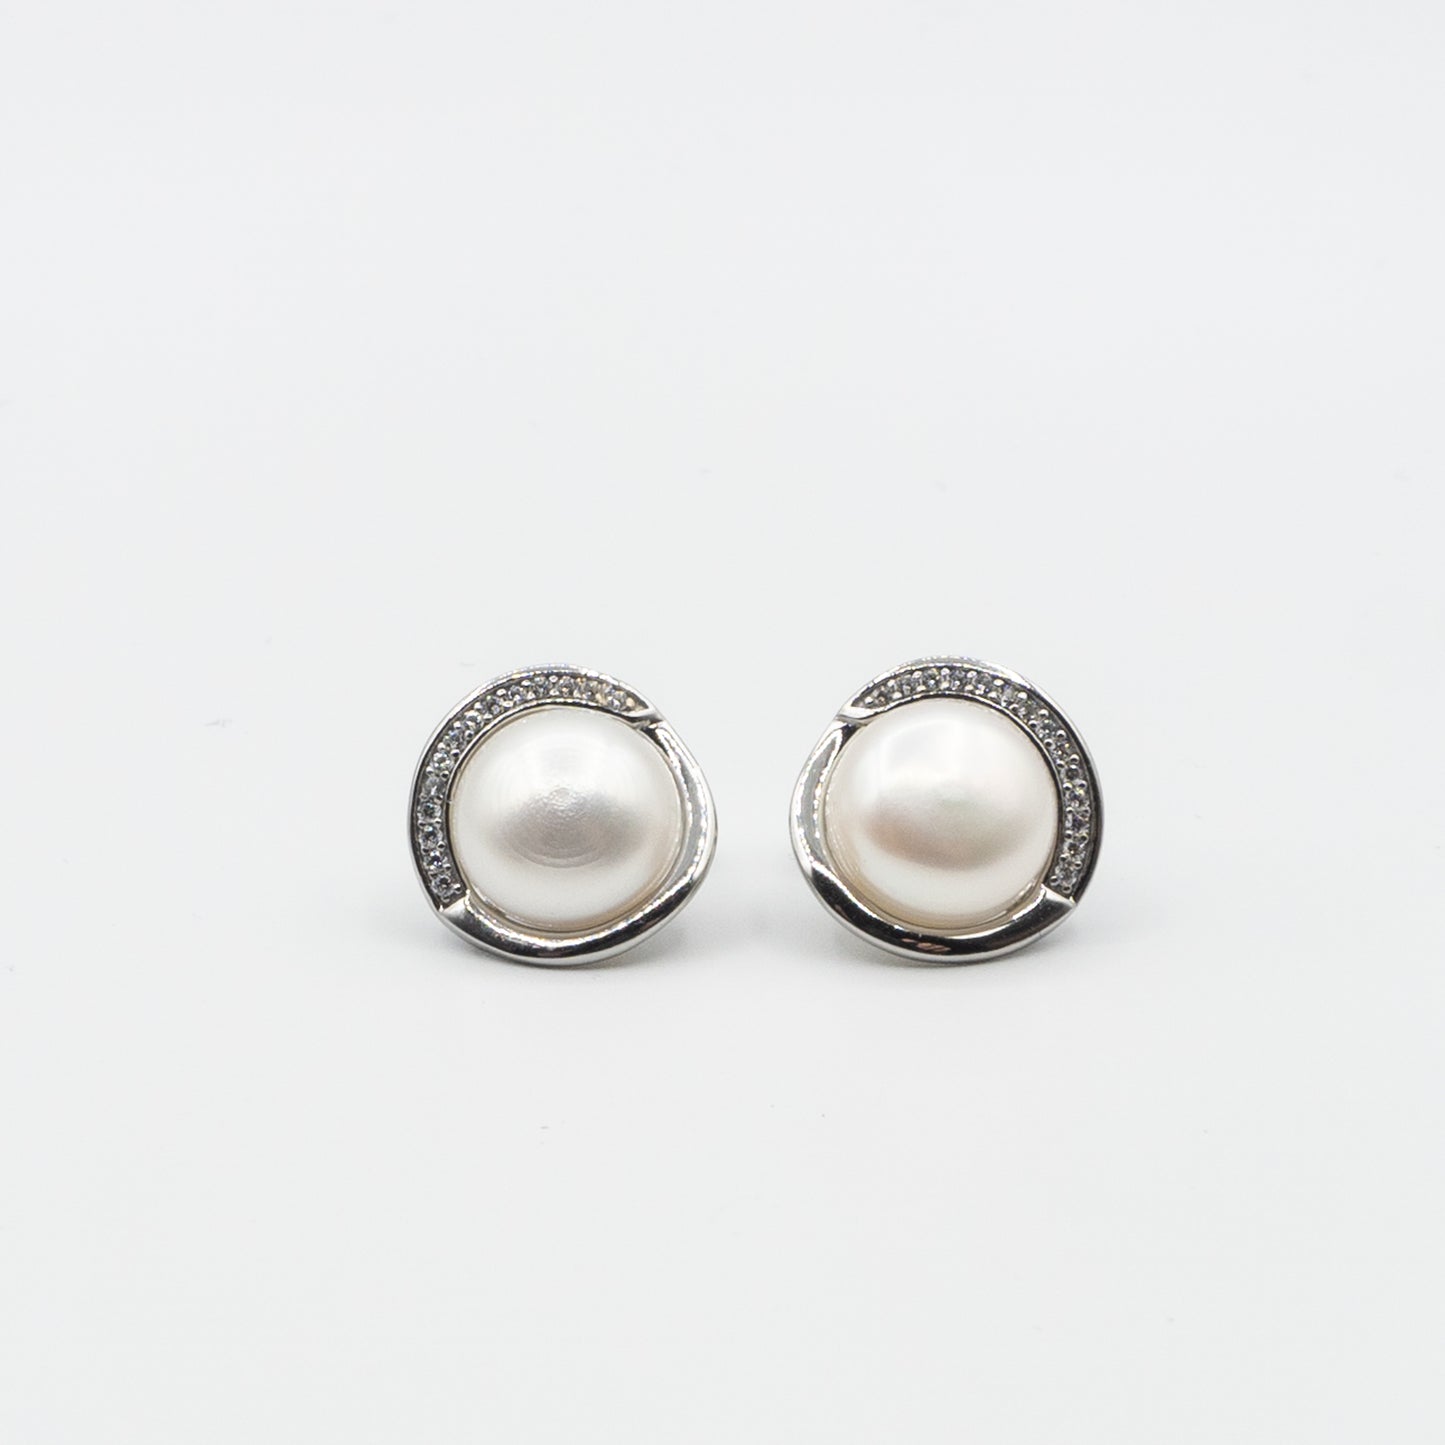 DK-925-128 Sterling silver pearl studs